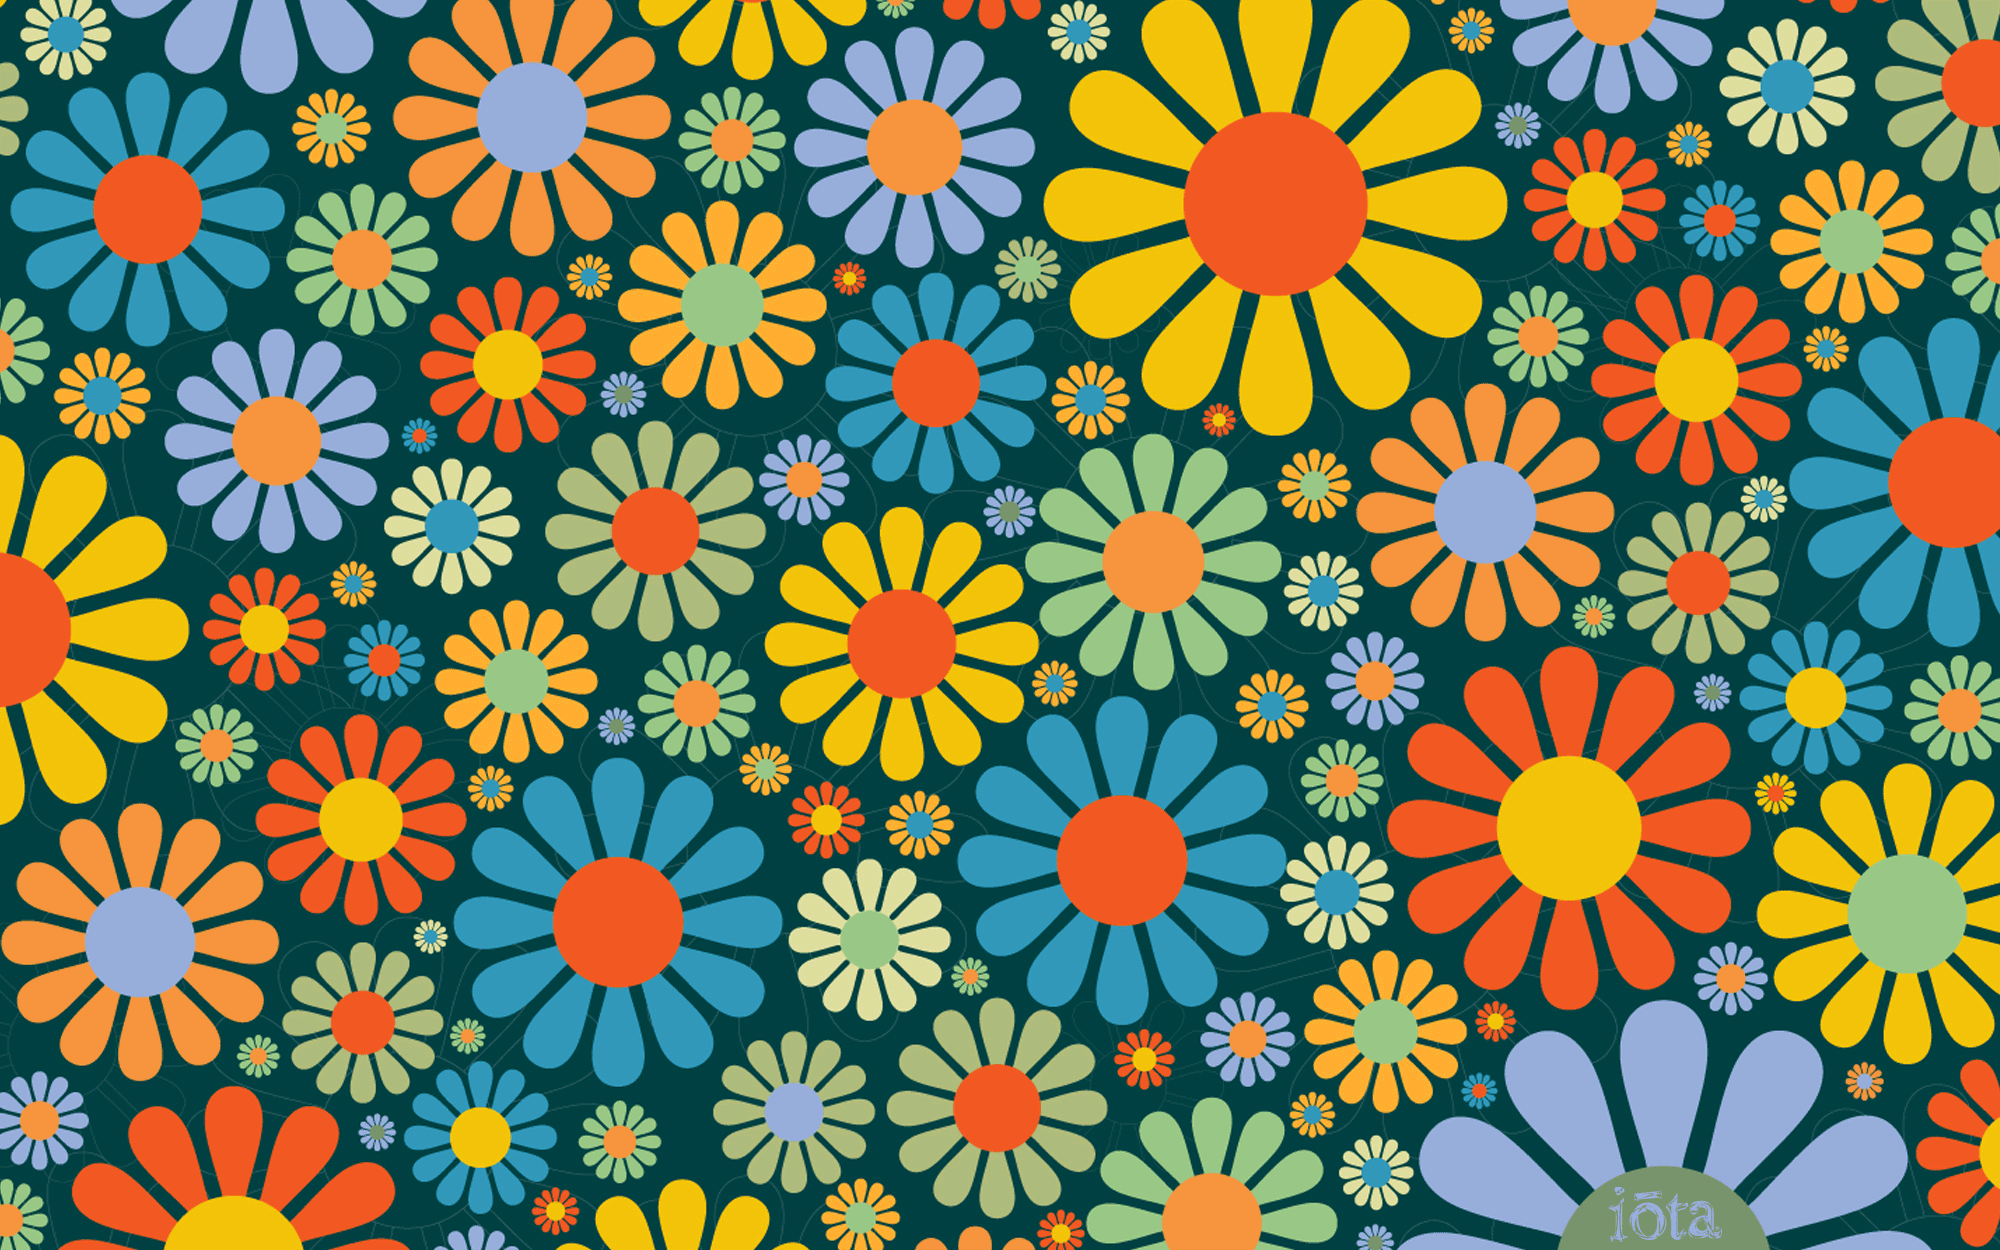 Wallpaper For 70s Flower Background 2000x1250. Hippie wallpaper, Power wallpaper, Flower power